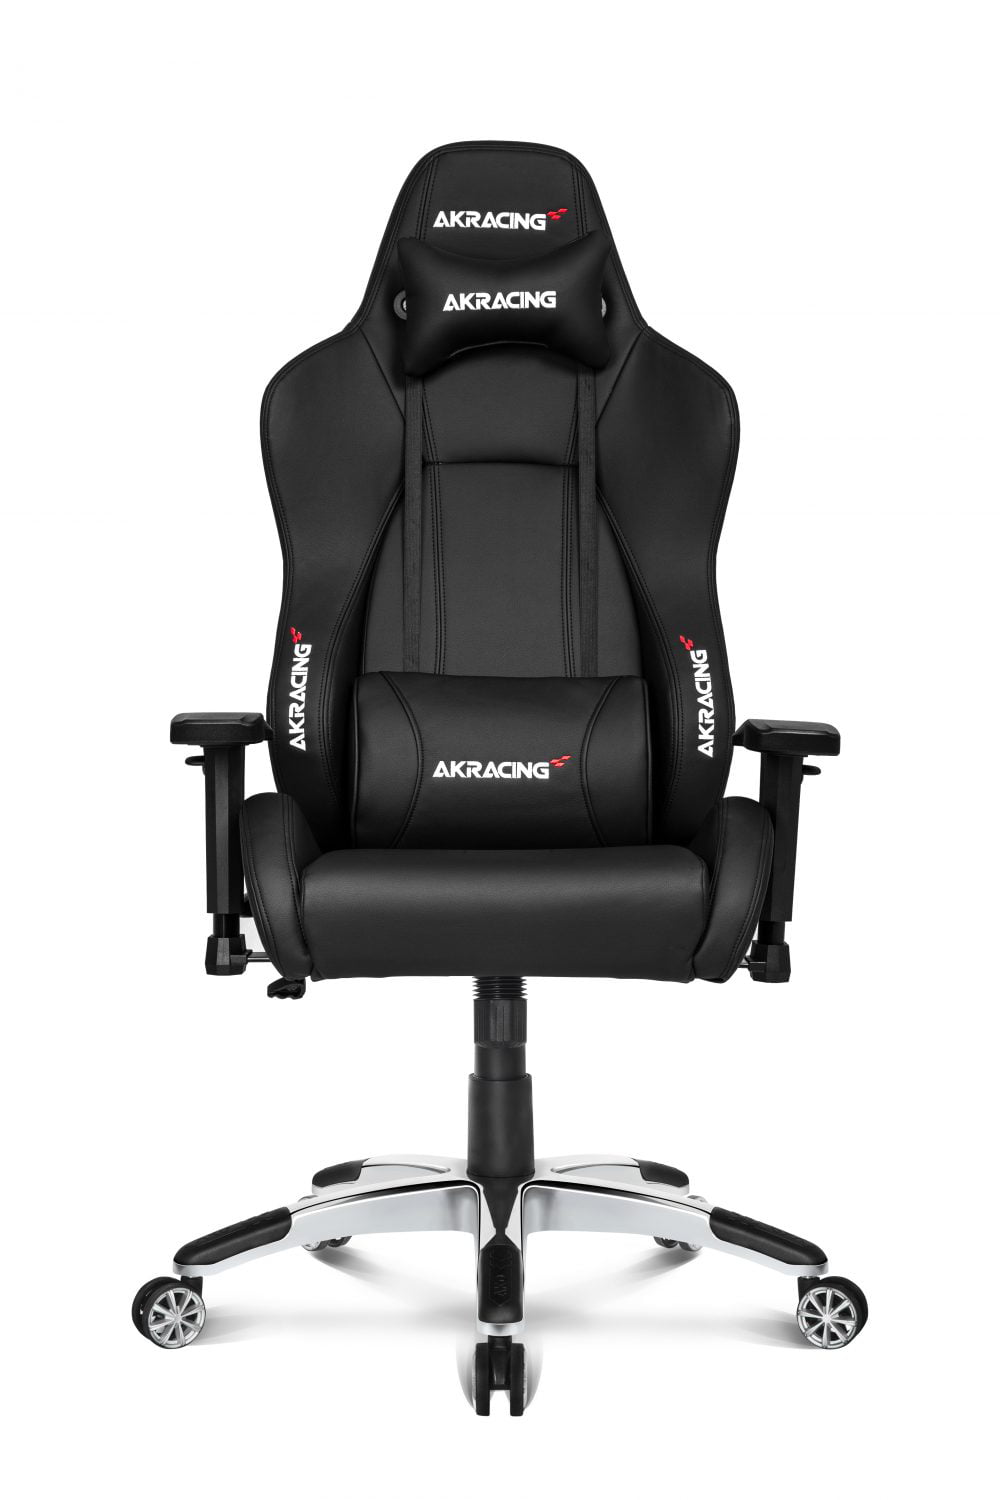 AKRacing Premium Executive High-back Office Gaming Chair, Black